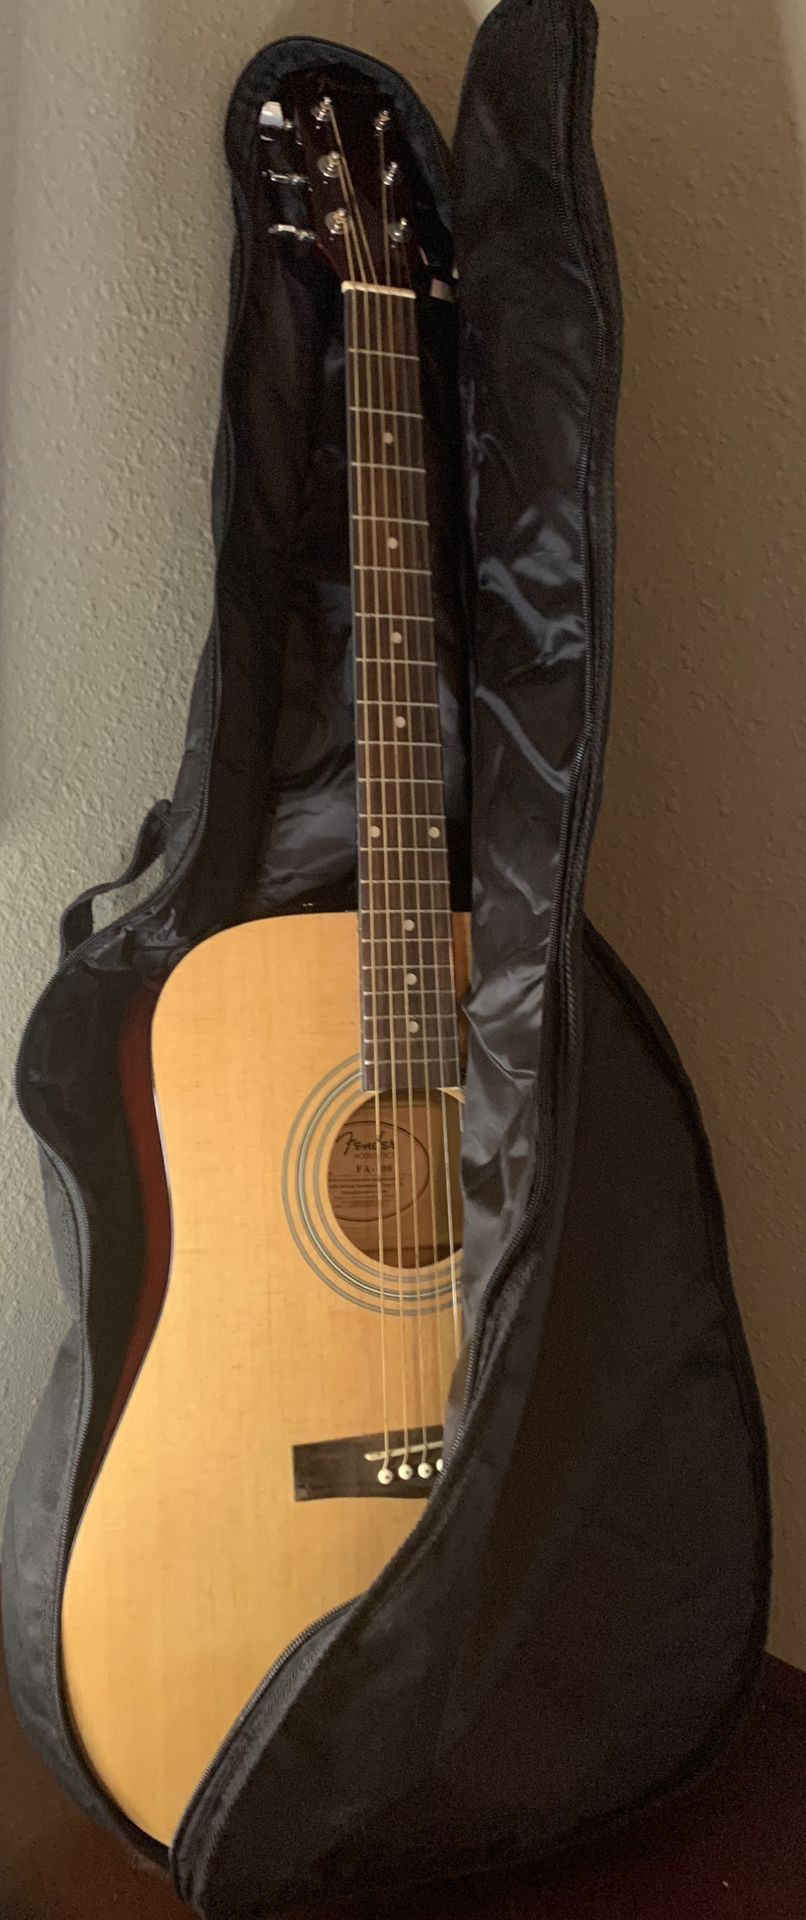 Fender acoustics FA-100 guitar and case excellent condition